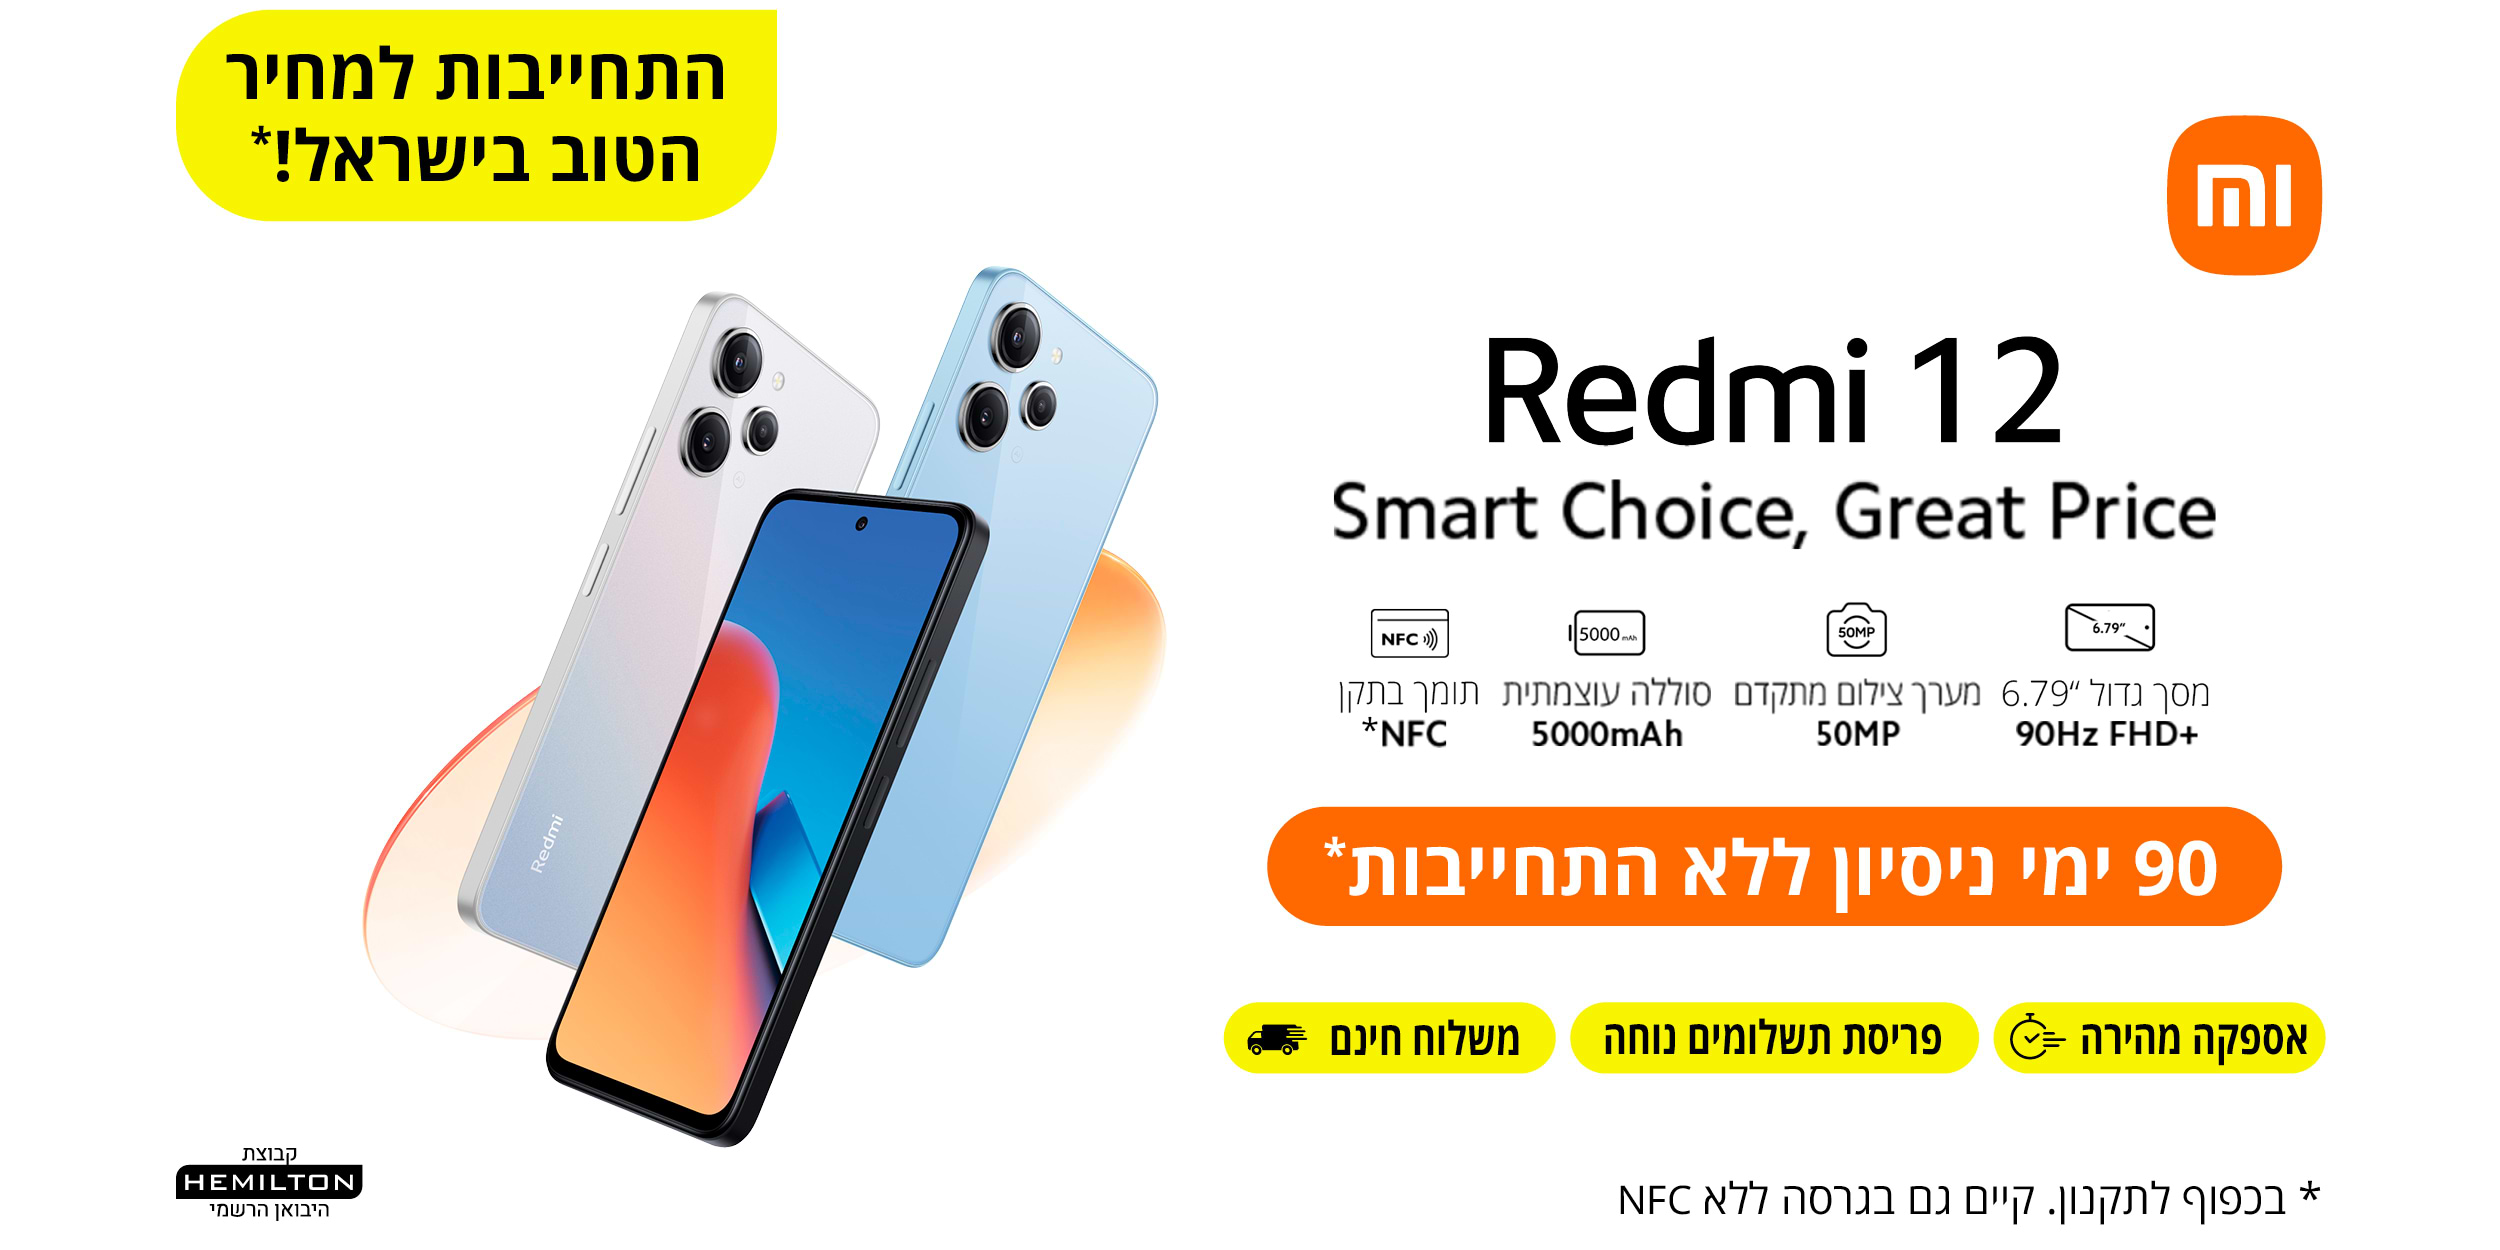 Redmi 12 Smart Choice Great Price 90 ימי ניסיון ללא התחייבות והתחייבות למחיר הטוב בישראל!*  תומך בתקן NFC | סוללה עוצמתית 5000mAh| מערך צילום מתקדם 50MP | מסך גדול 6.79 אינץ' 90Hz FHD+ | אספקה מהירה | פריסת תשלומים נוחה | משלוח חינם. *בכפוף לתקנון. קיים גם בגירסה ללא NFC